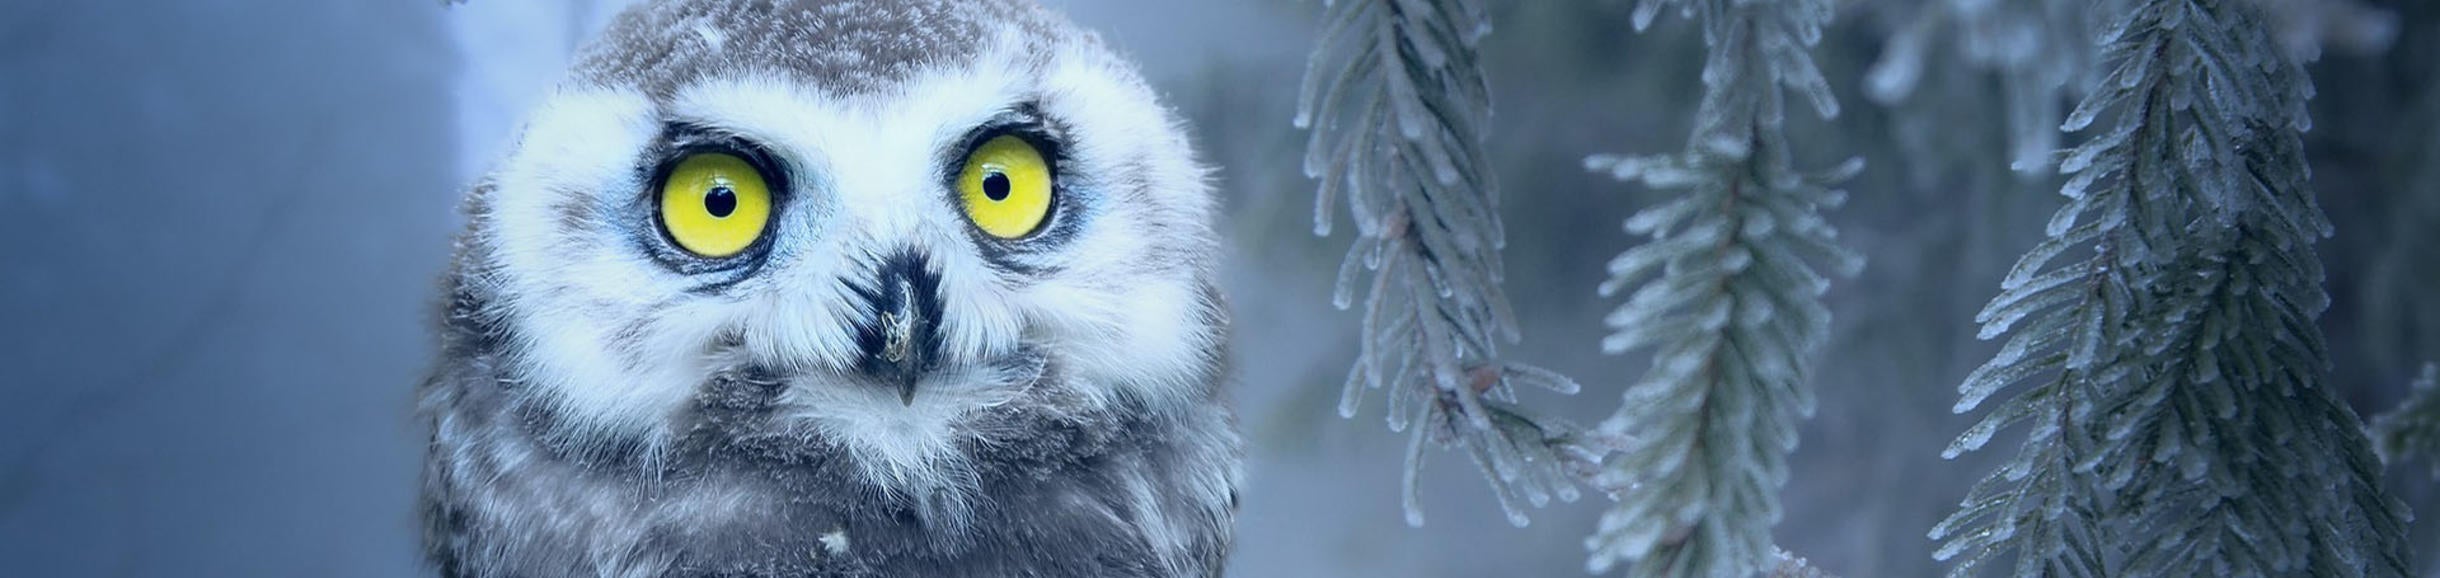 Alert snow owl looking at you, kid / pixabay.com